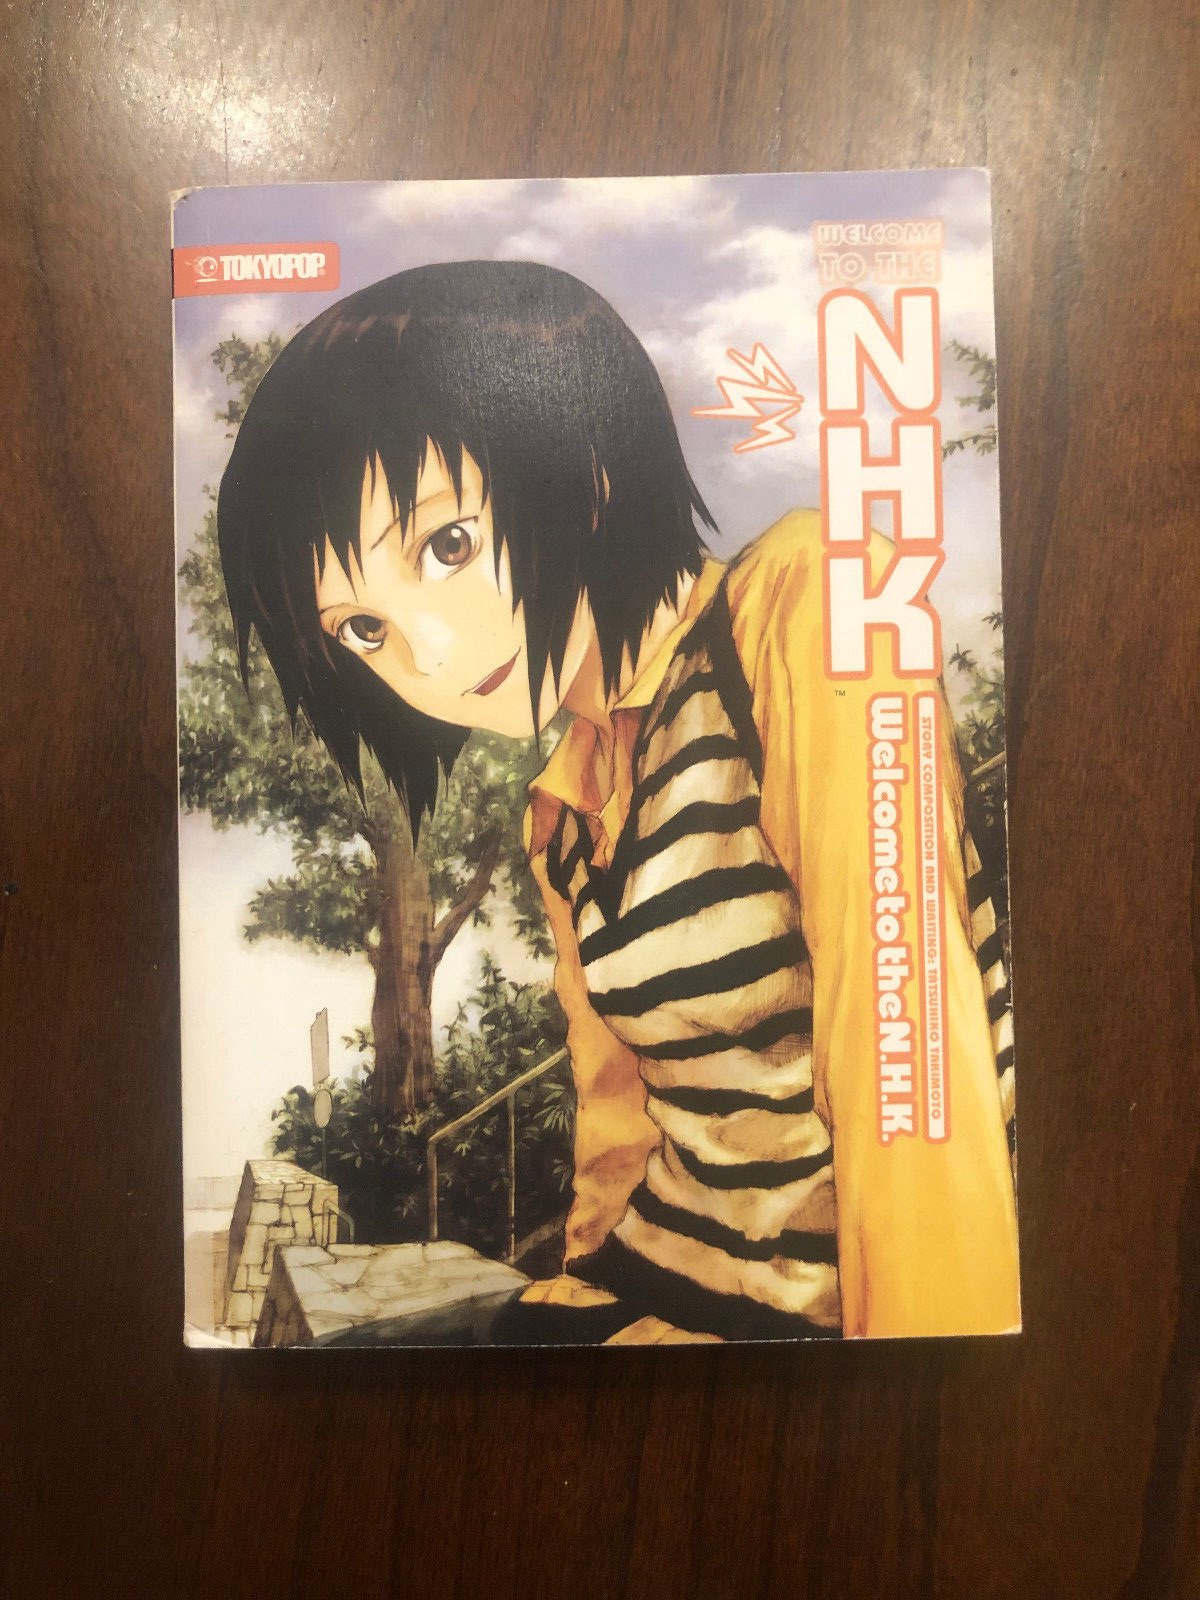 Welcome to the NHK English light novel tokyopop. Used